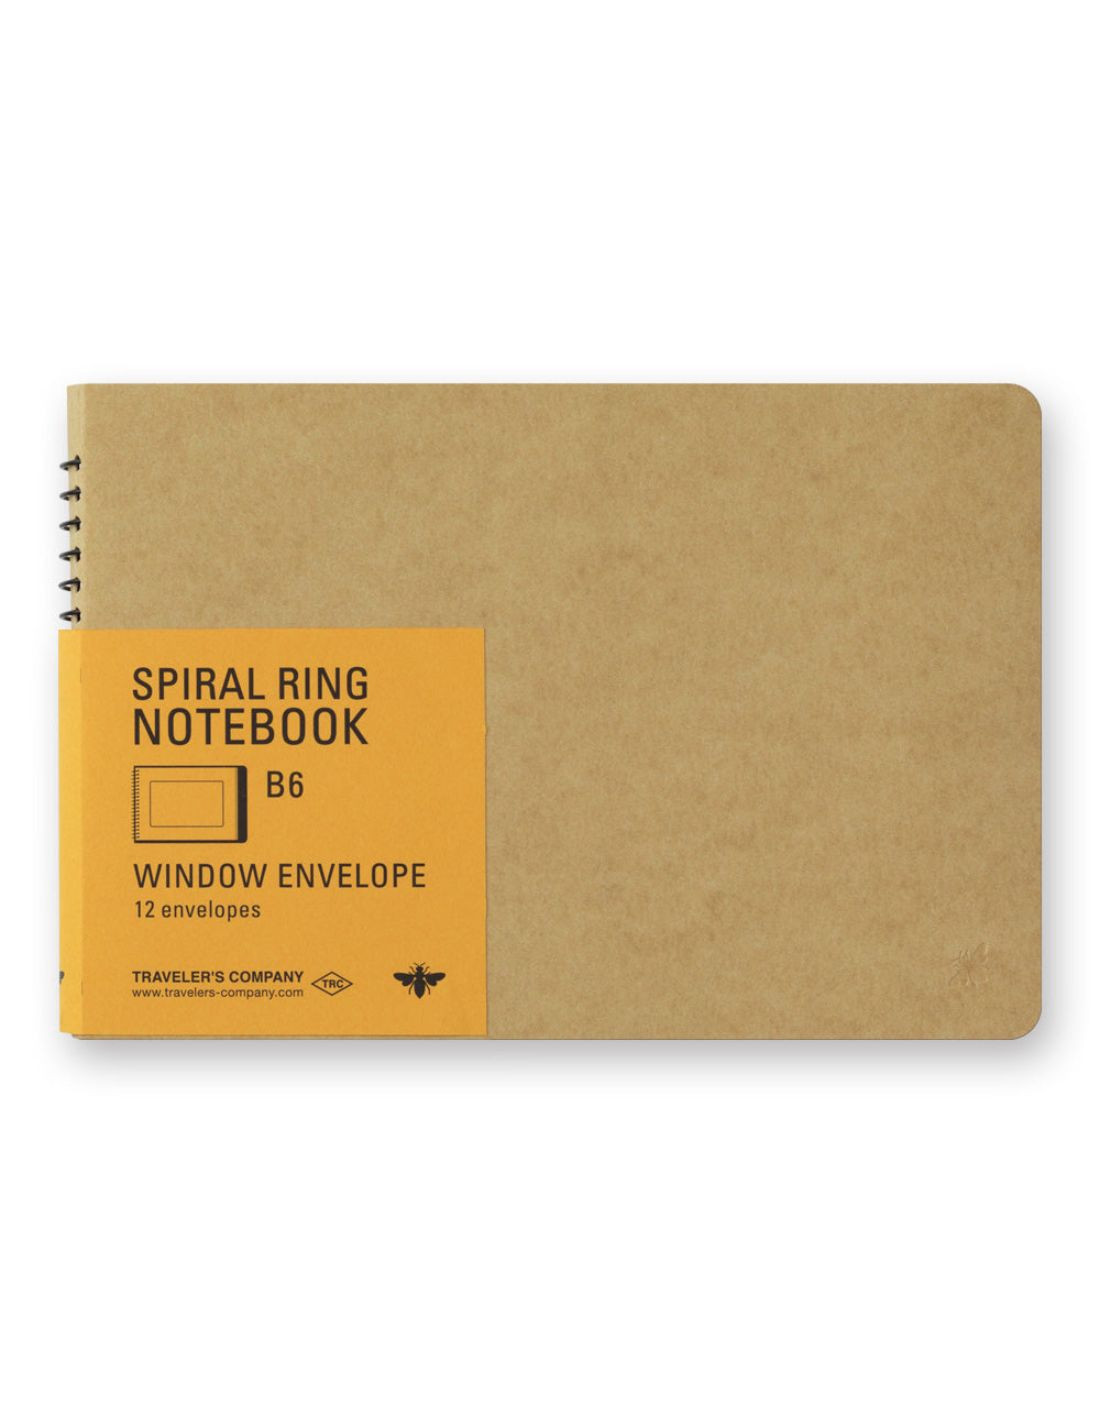 B6 Window Envelope - Spiral Ring Notebook - Traveler's Company